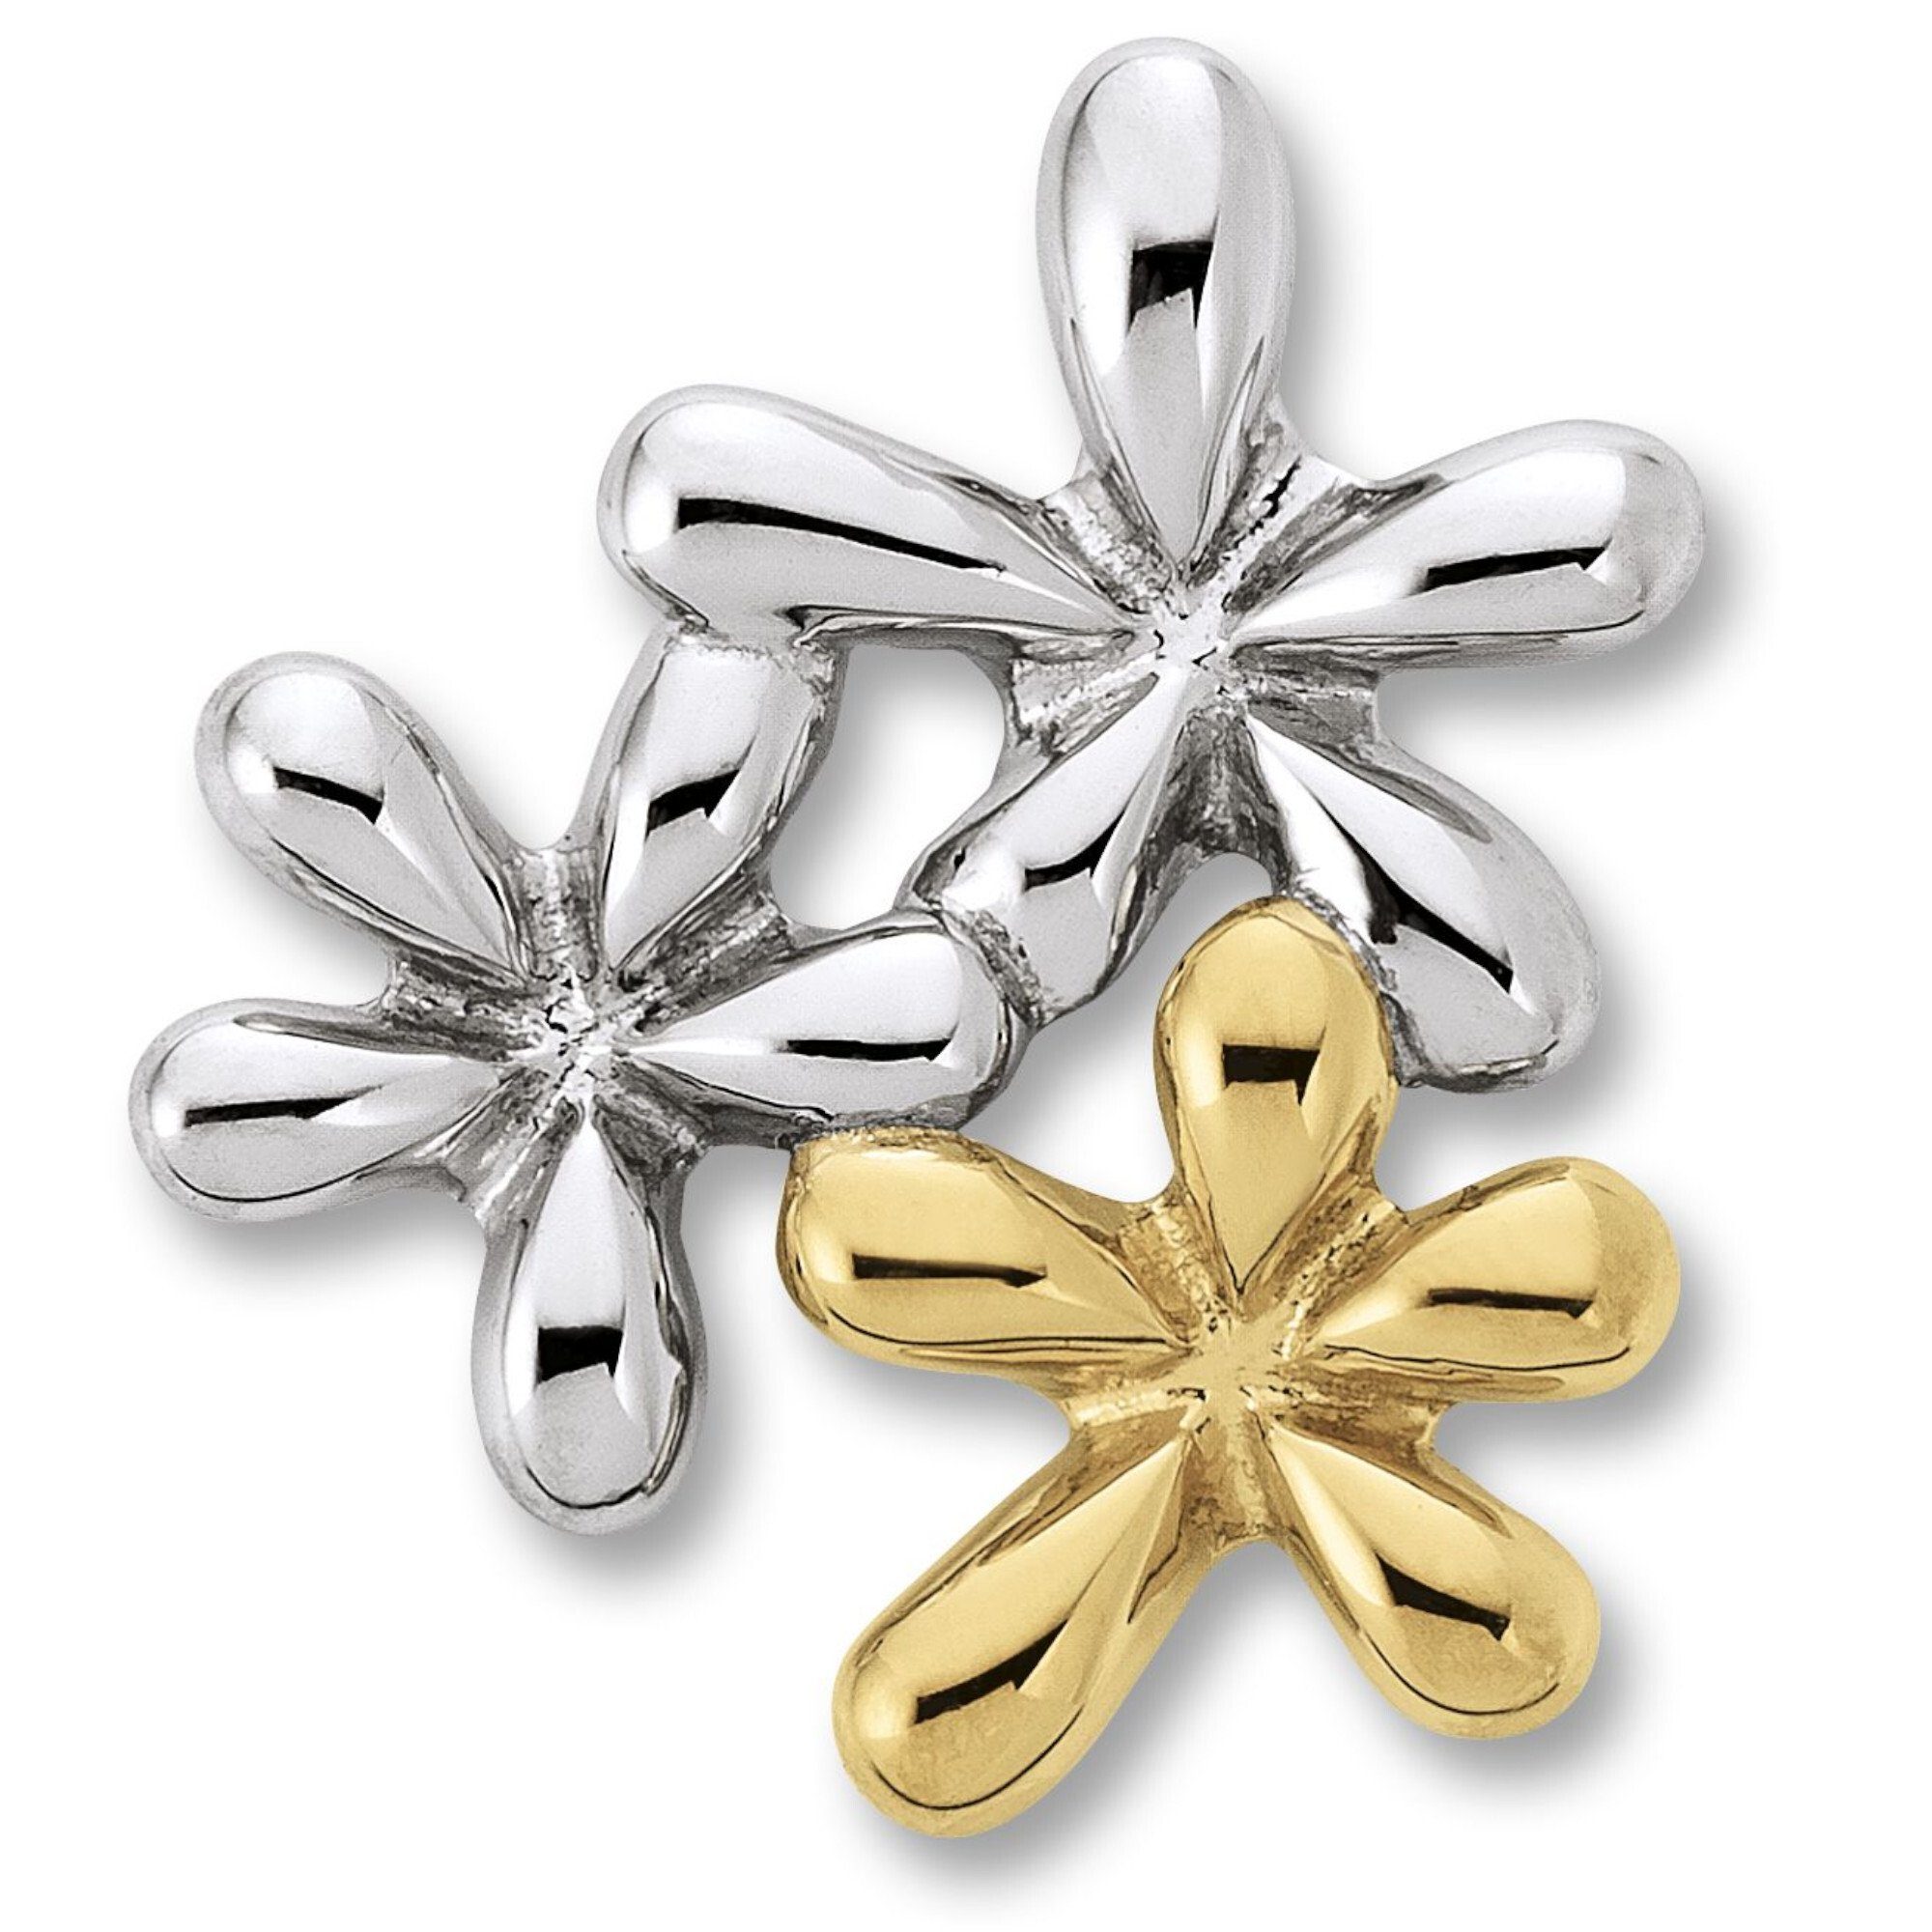 ONE ELEMENT Kettenanhänger Blume Anhänger aus 925 Silber, Damen Silber Schmuck Blume | Kettenanhänger